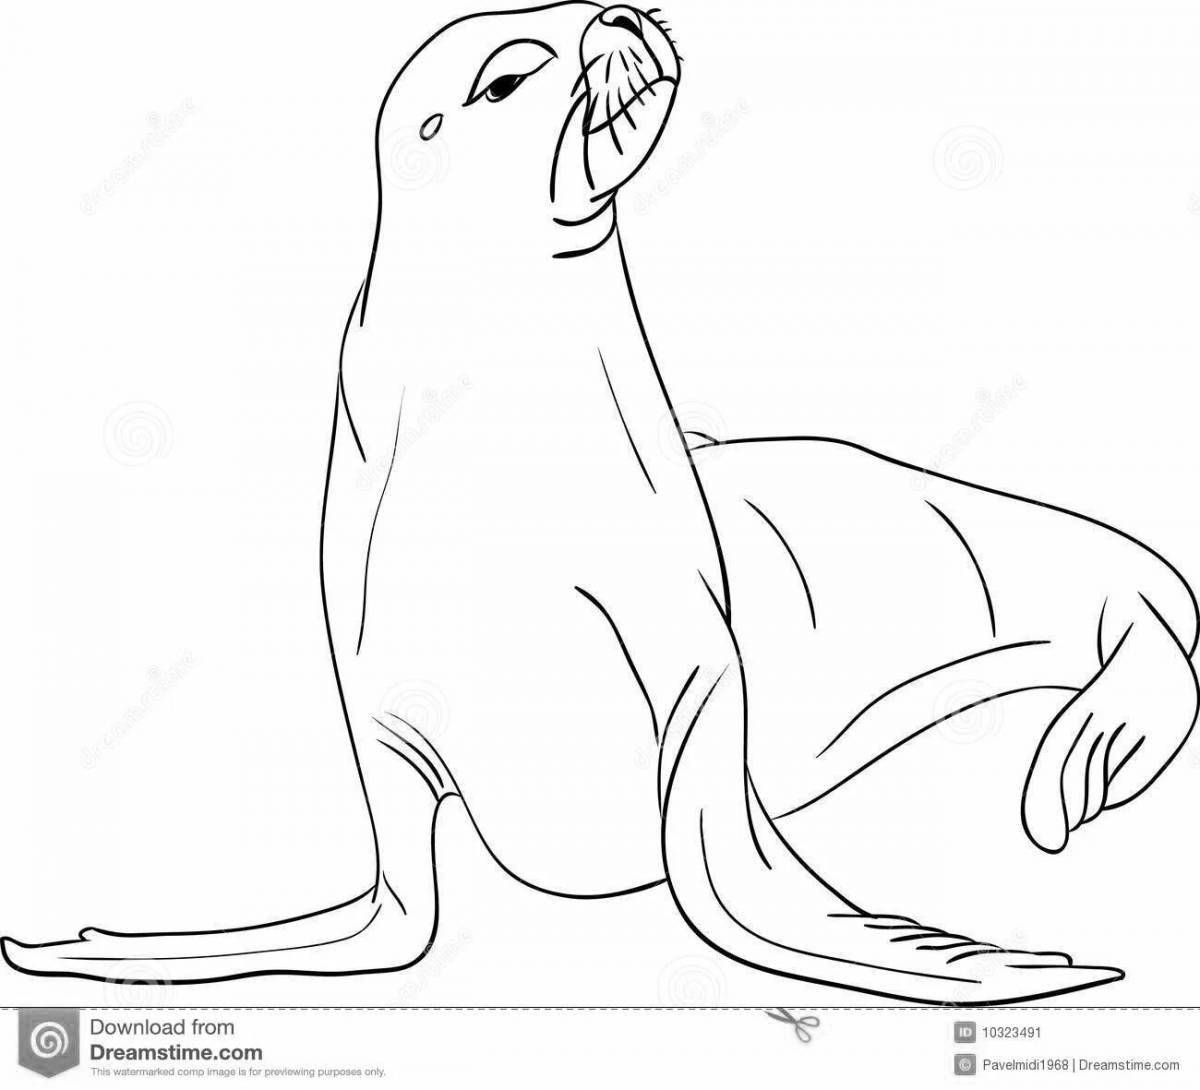 Gorgeous sea lion coloring page